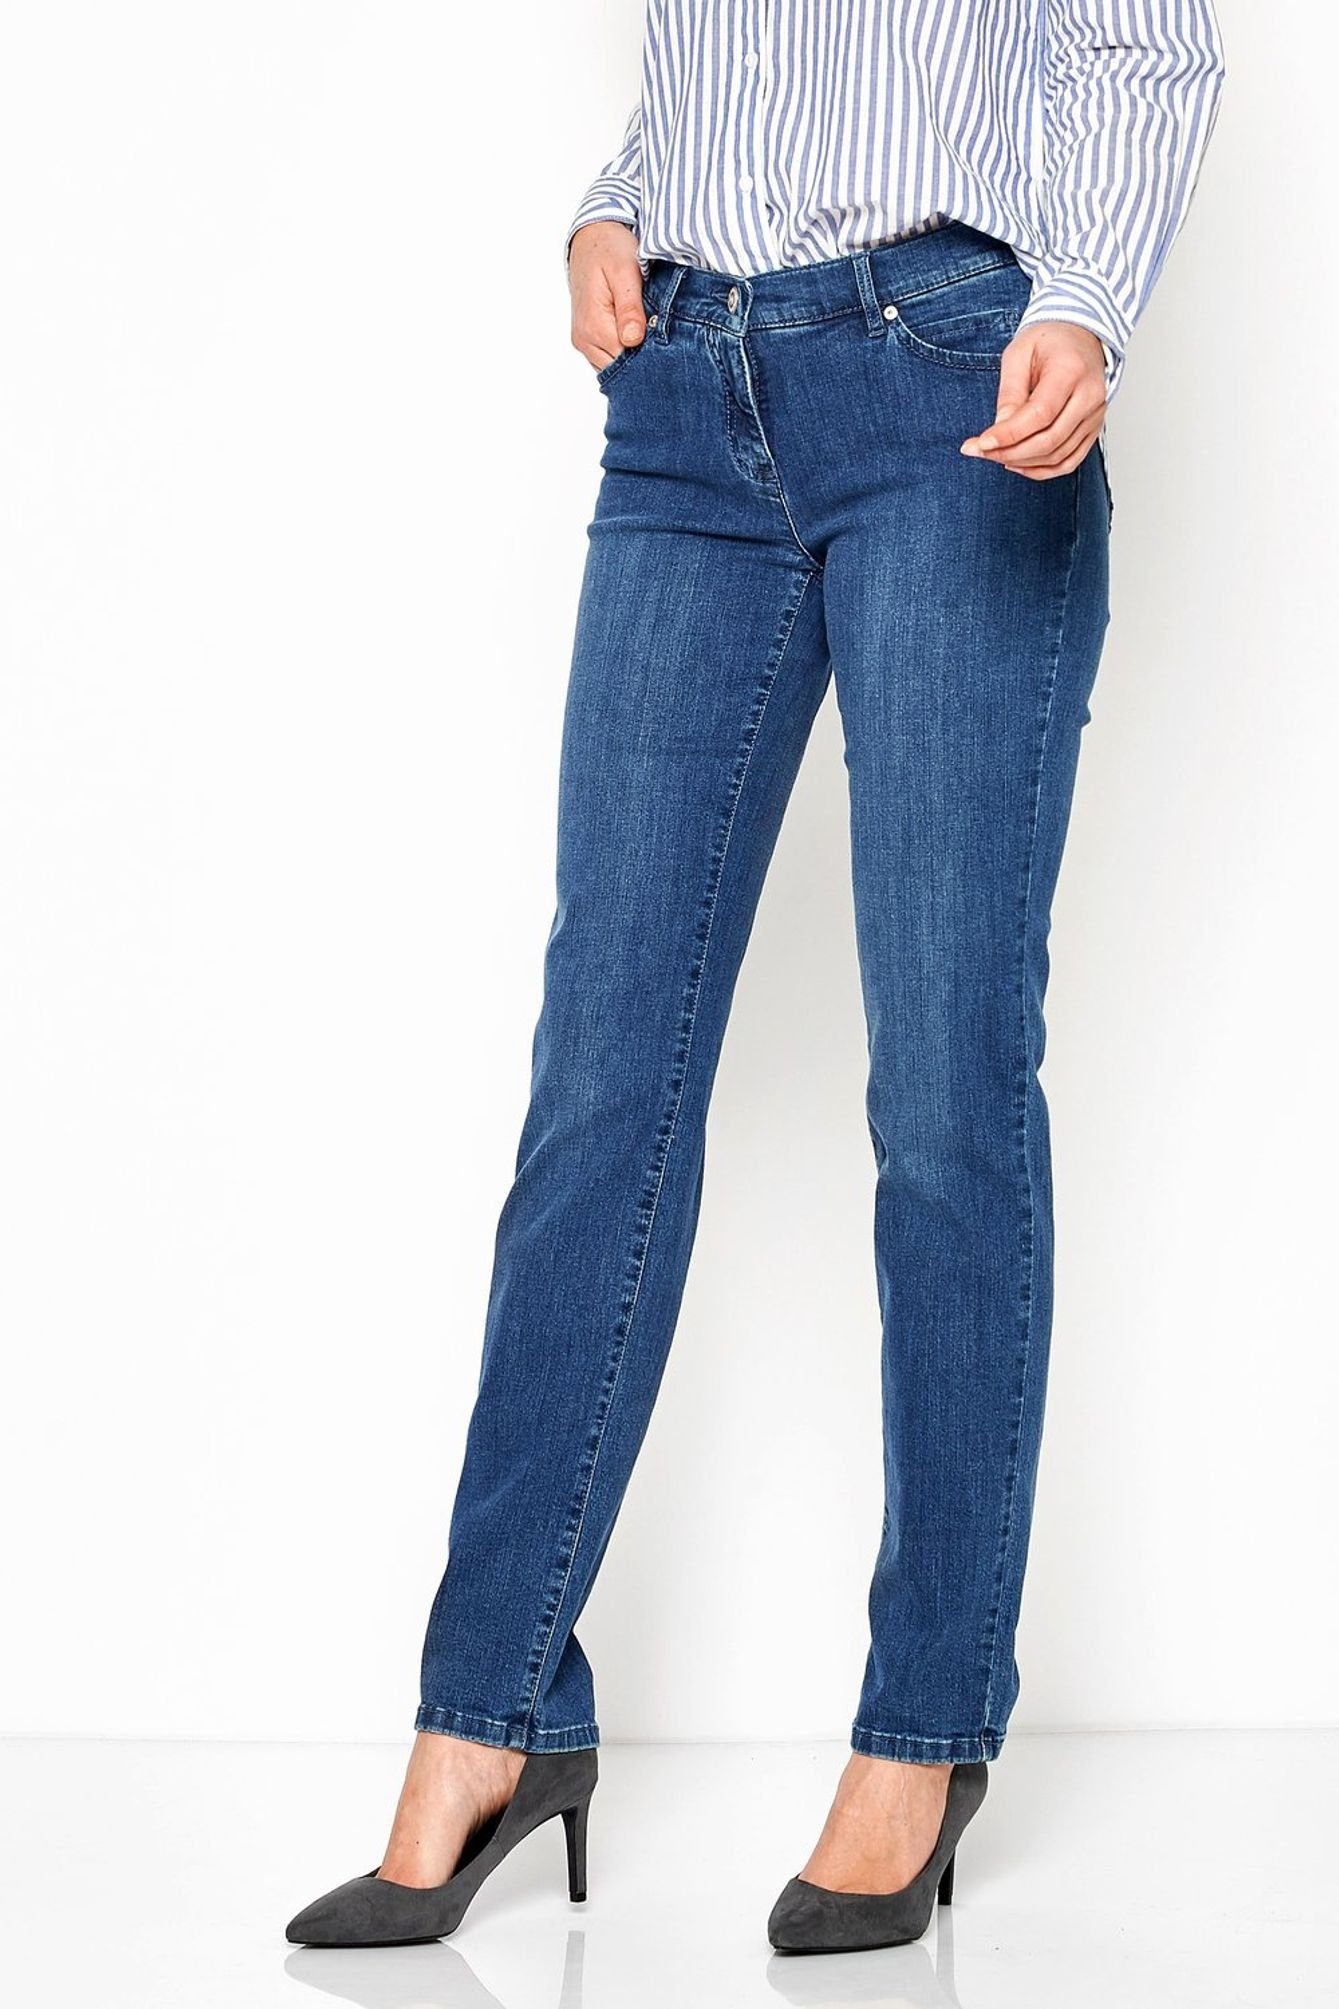 TONI 5-Pocket-Jeans 12-04 1106 5-Pocket-Design blue (502) used mid